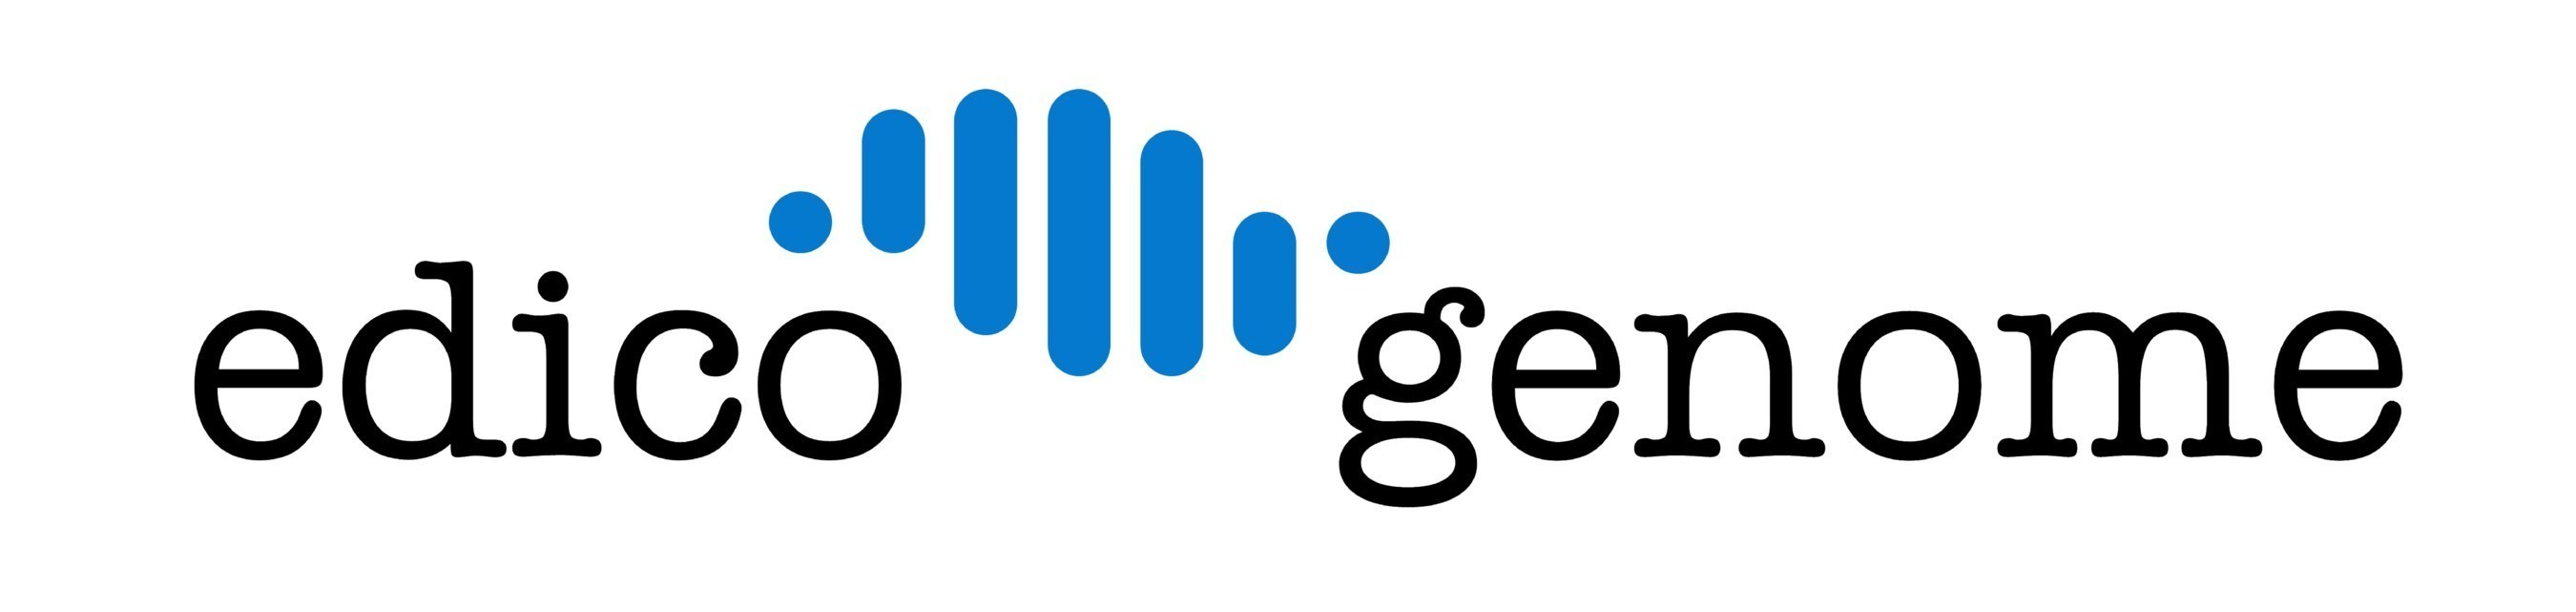 Edico Genome's logo (2014)